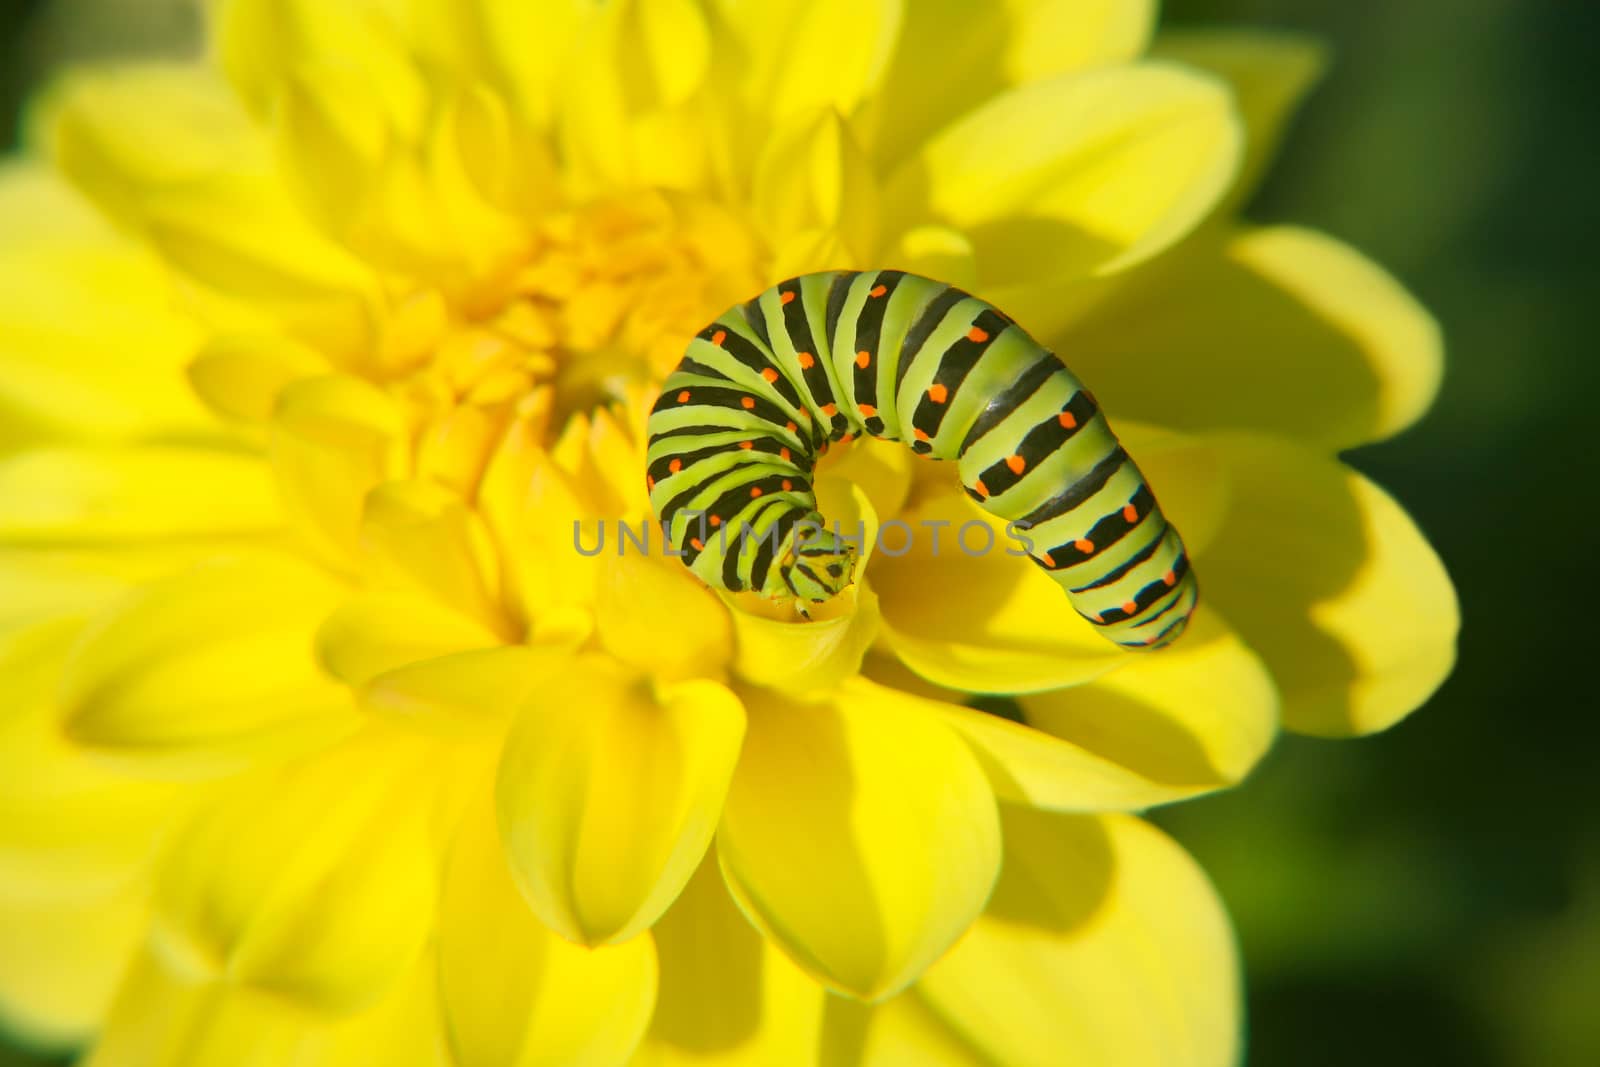 Caterpillar on yellow flowe by yurii_bizgaimer